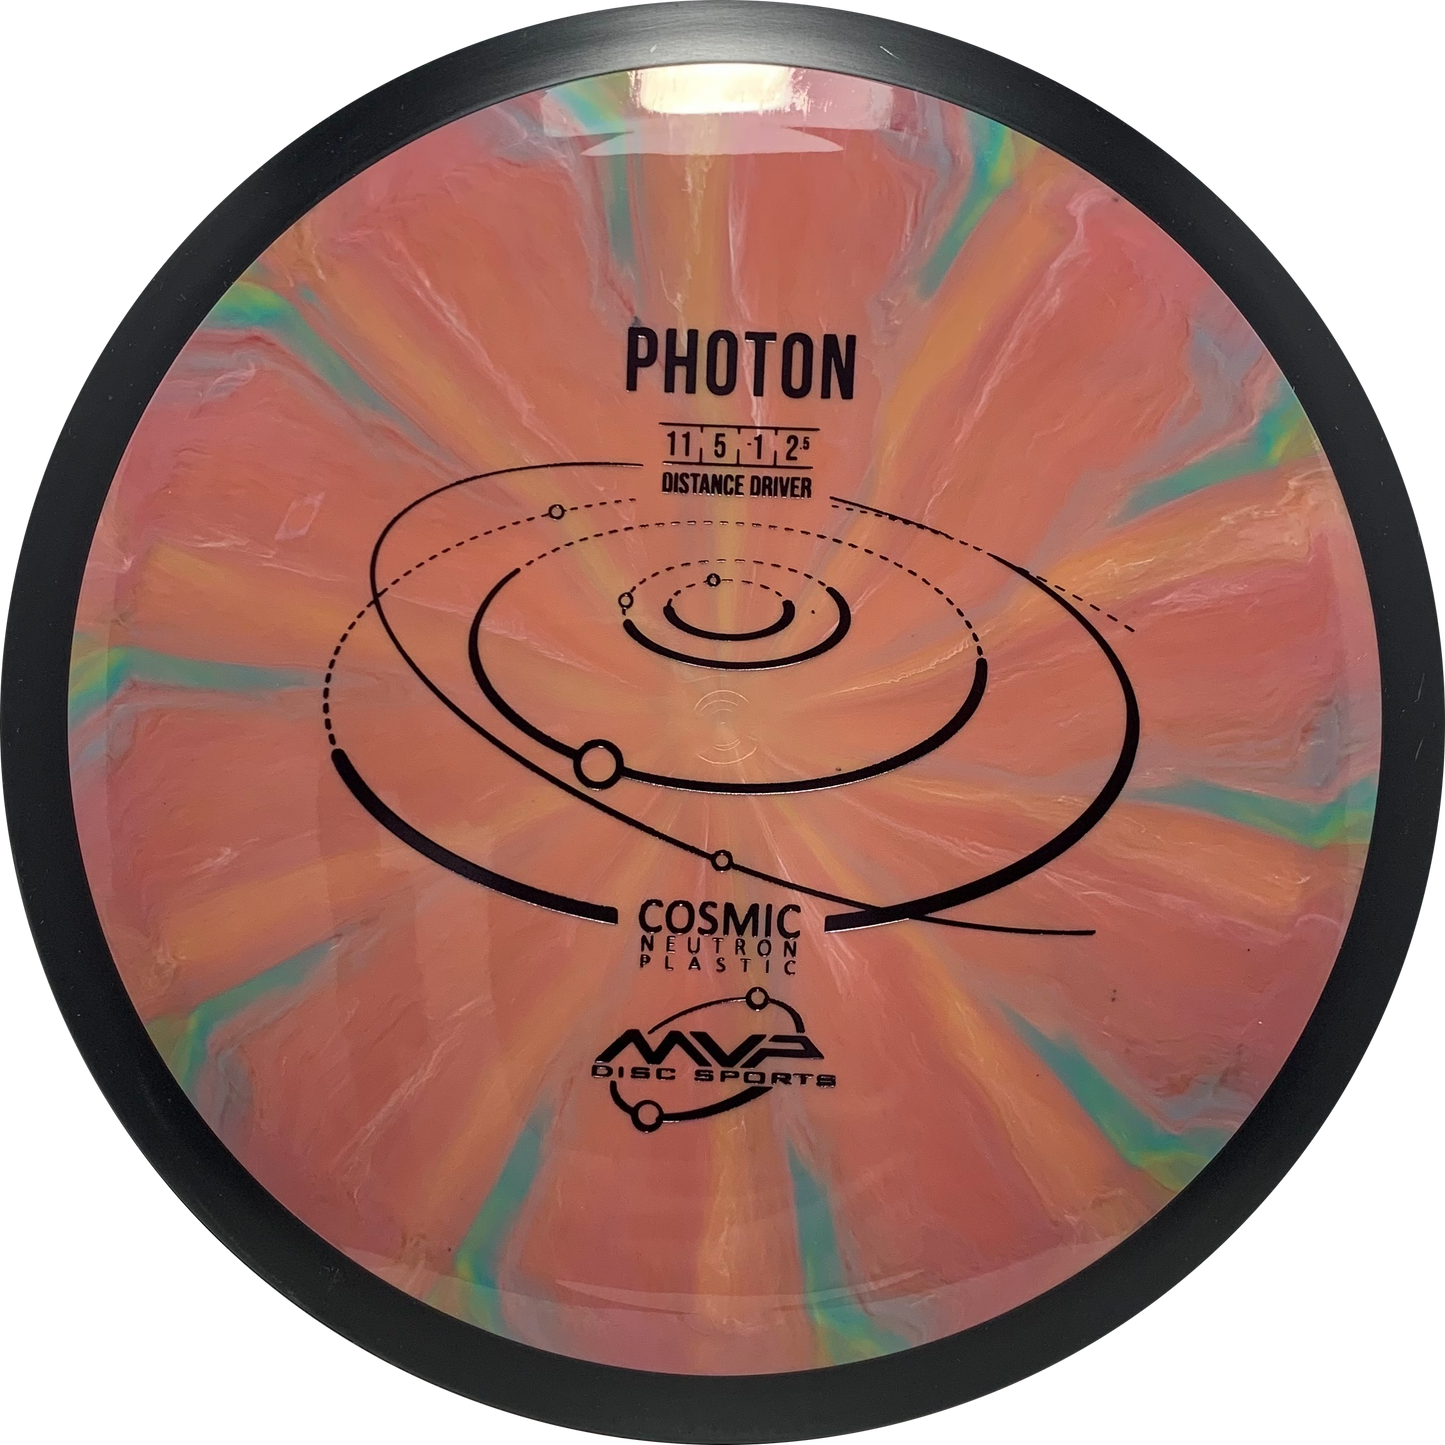 Photon - Cosmic Neutron